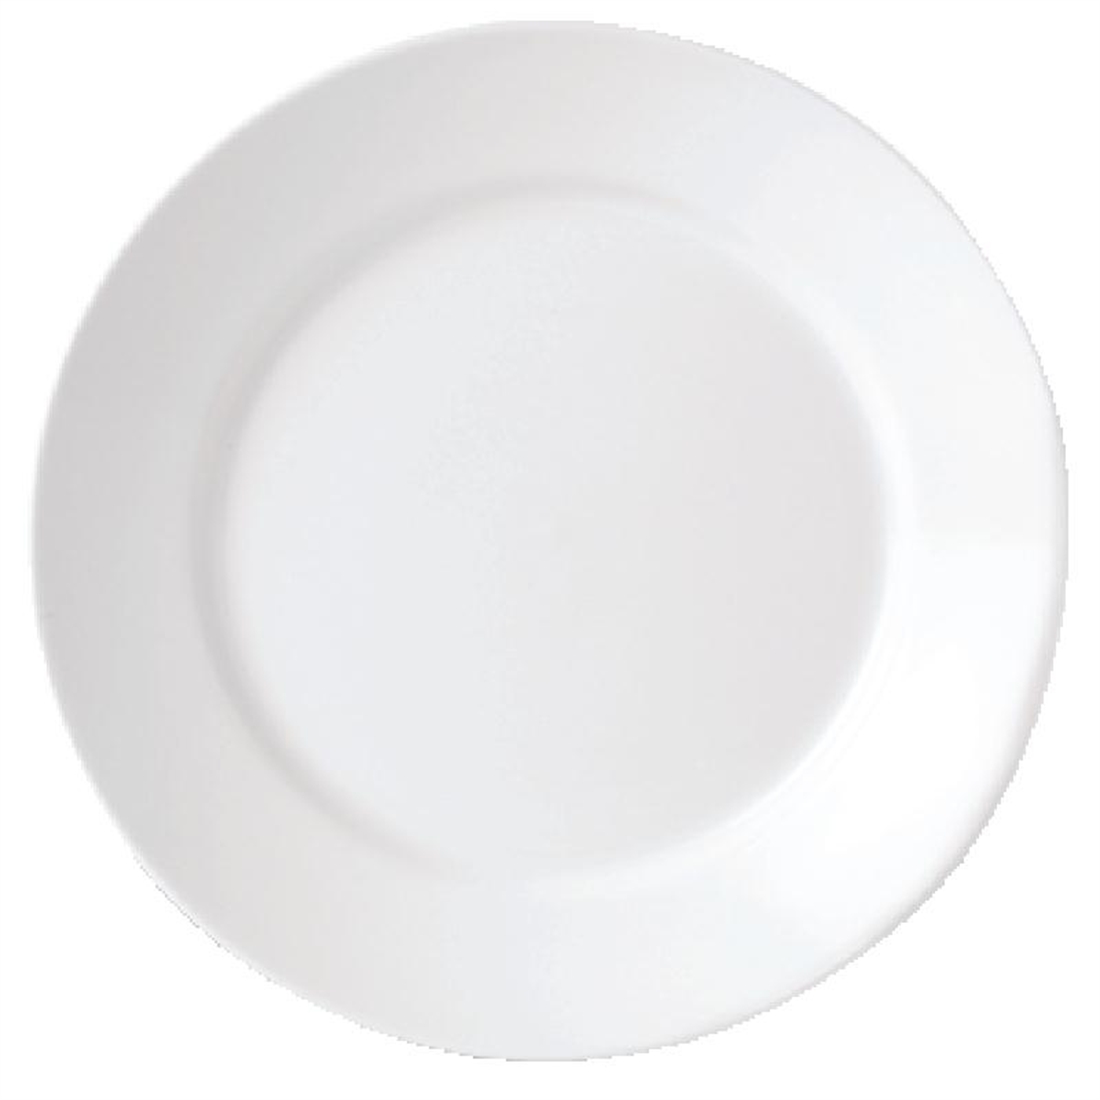 Steelite Simplicity White Ultimate Bowls 269mm